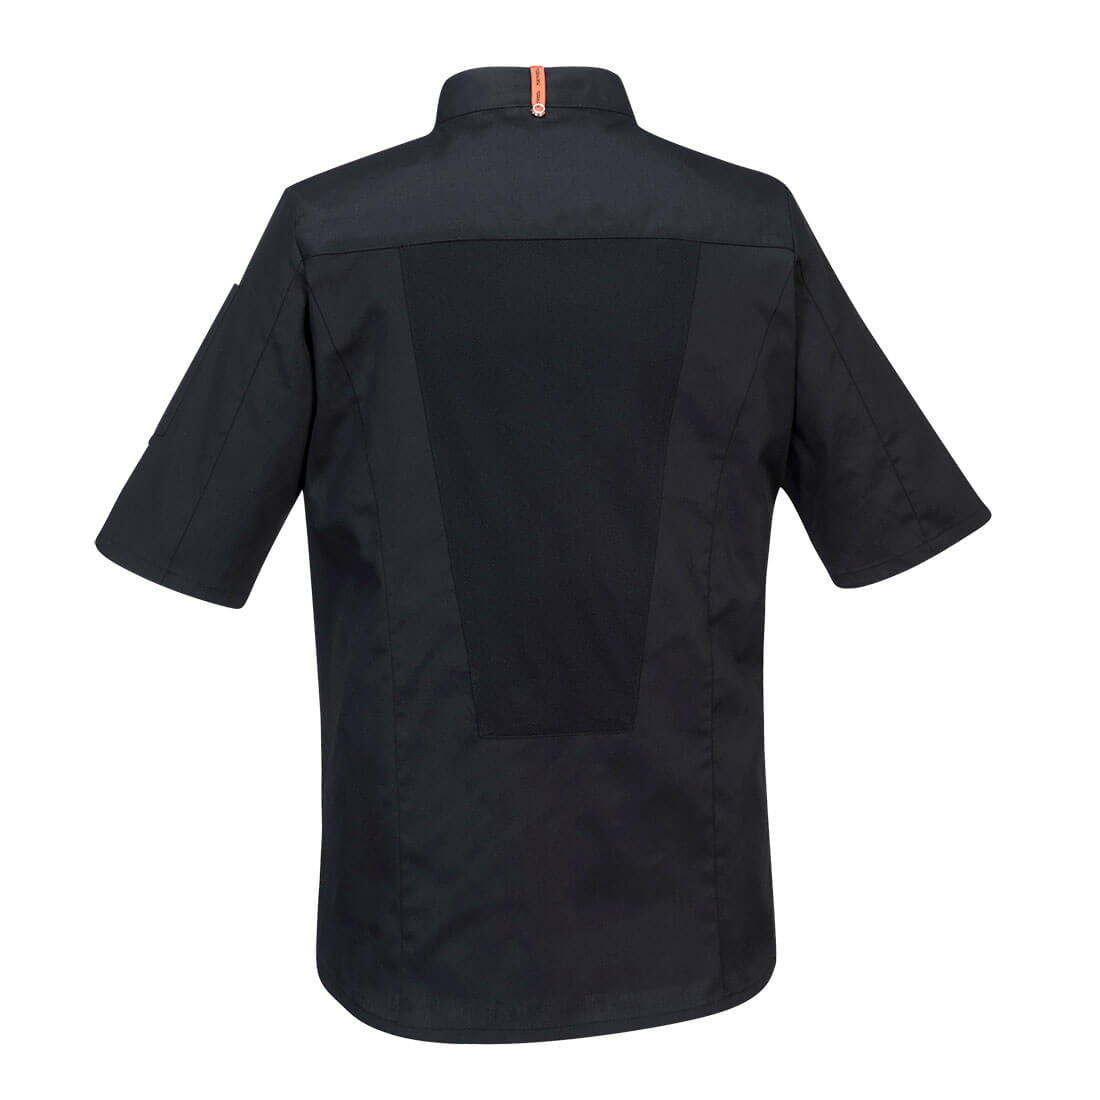 Stretch Mesh Air Pro Short Sleeve Jacket - Safetywear